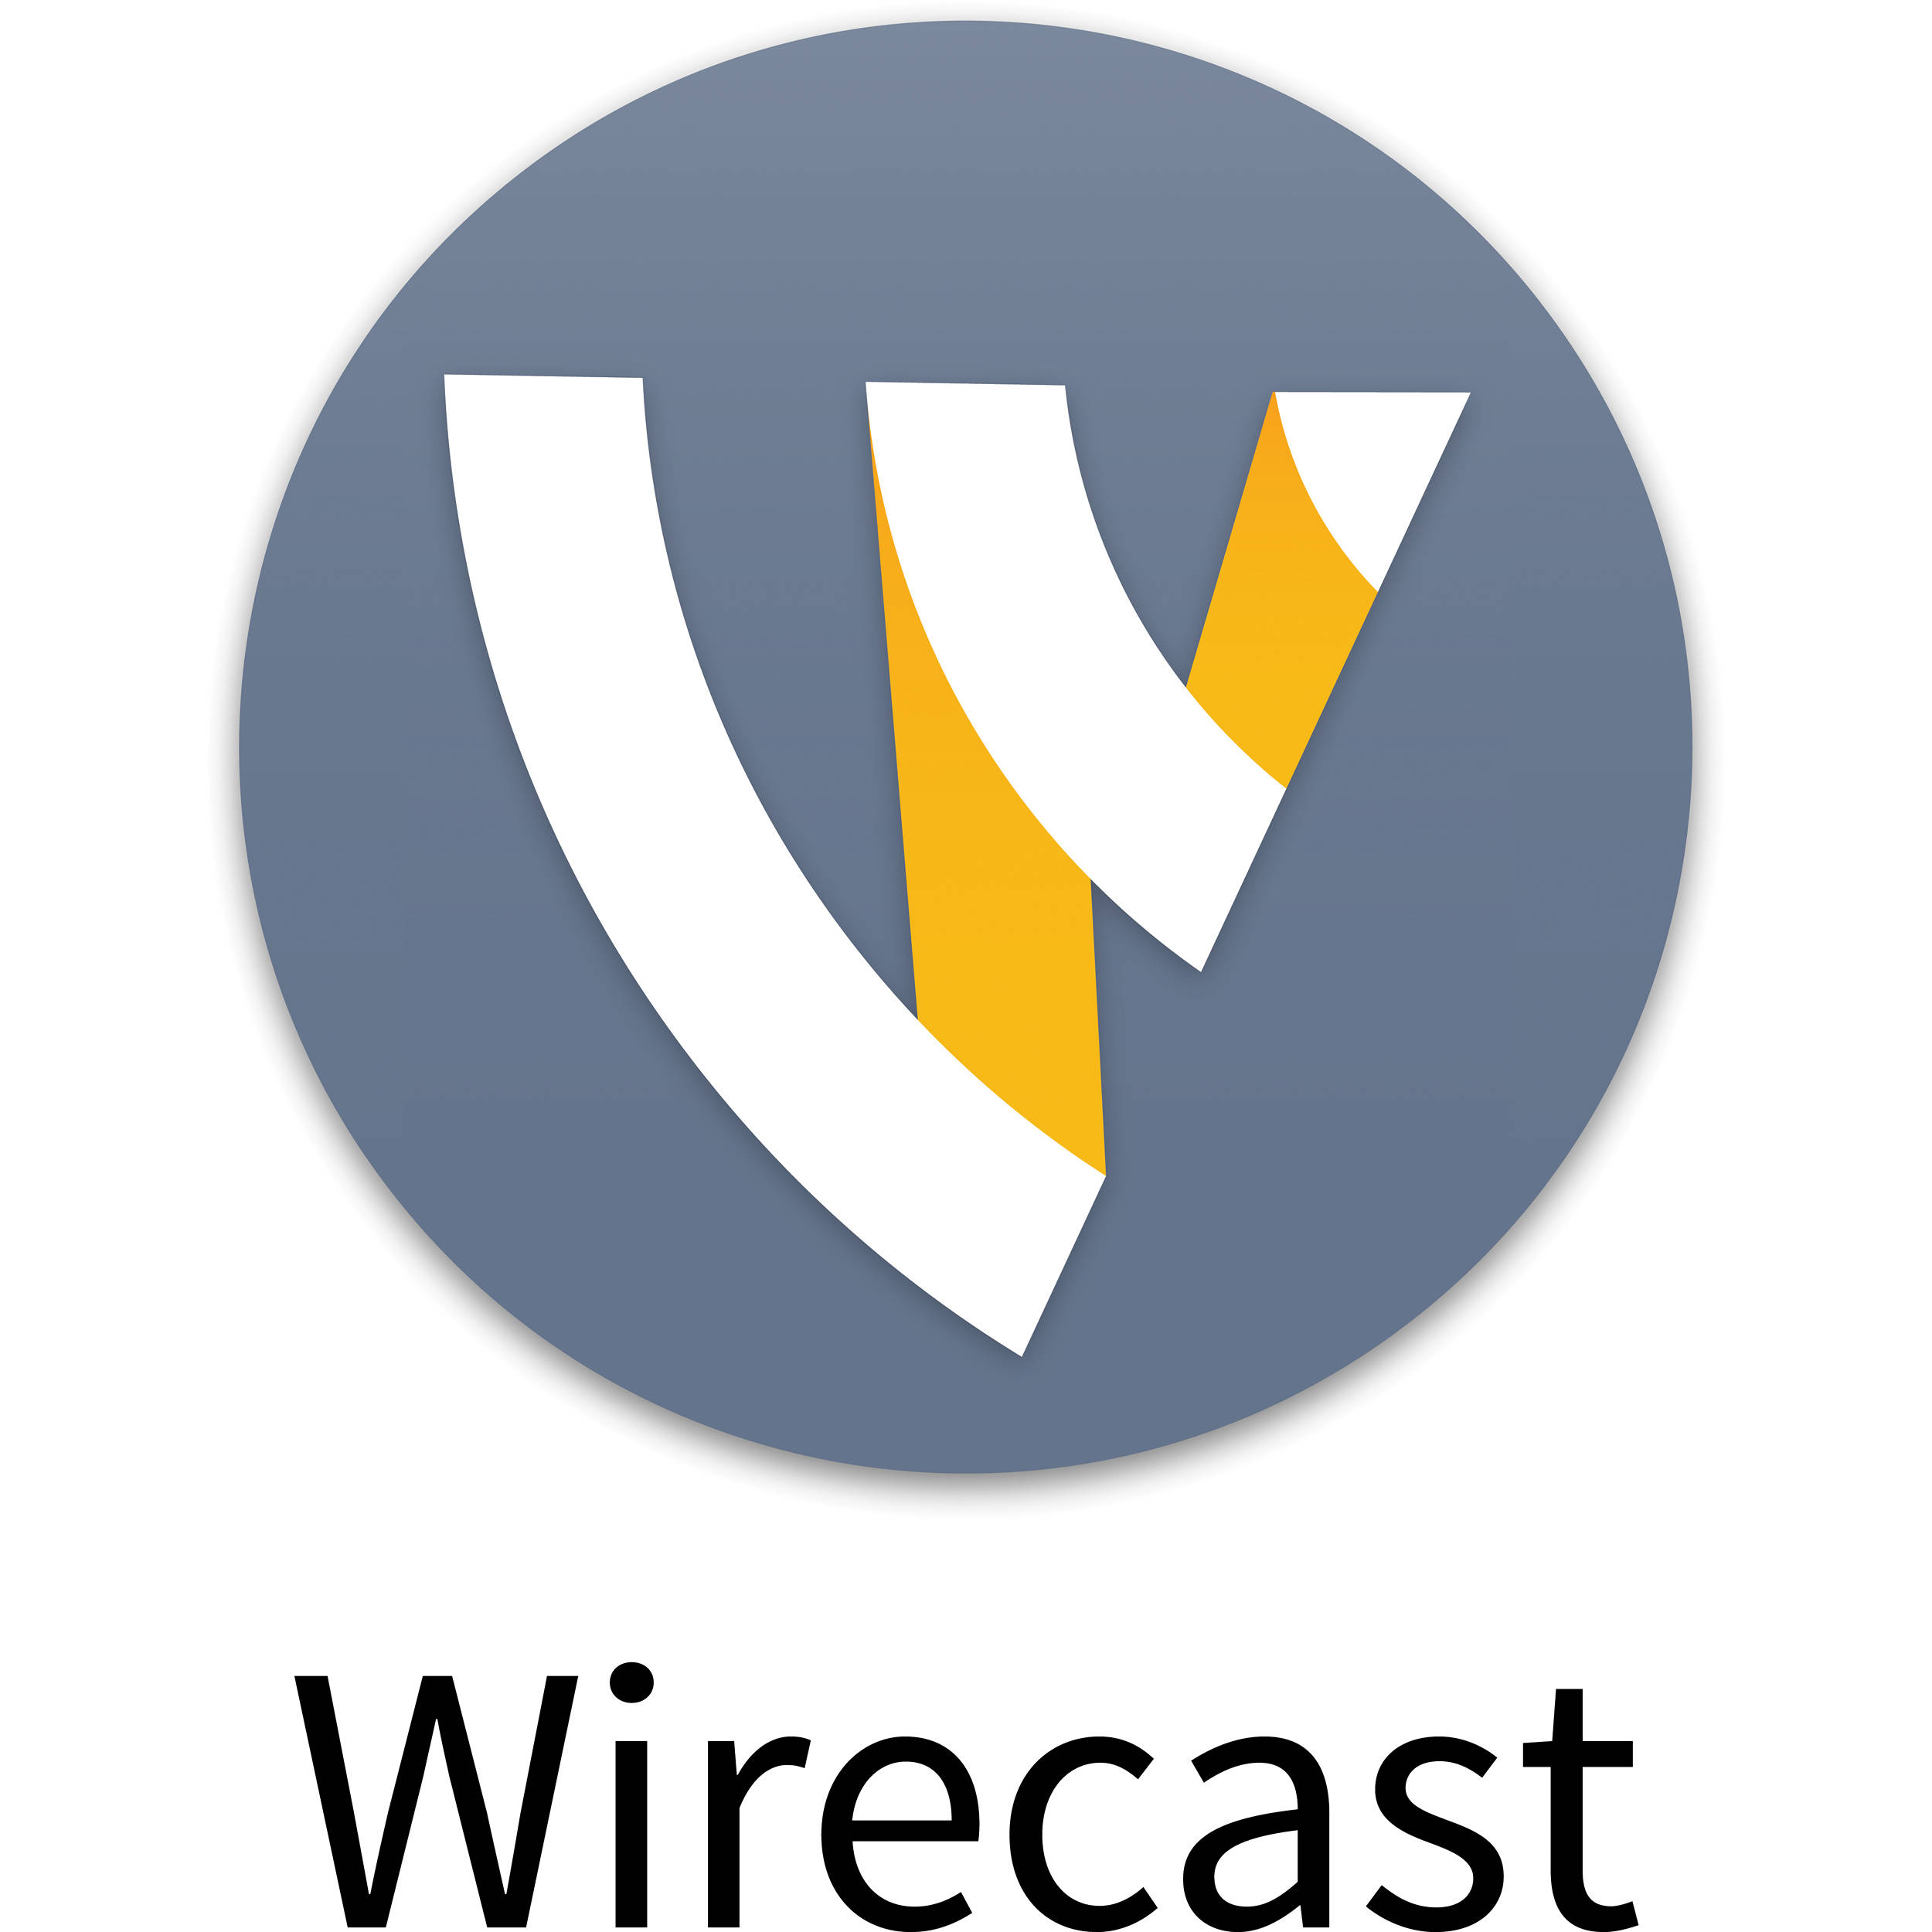 wirecast pro 6 wont recognize audio input